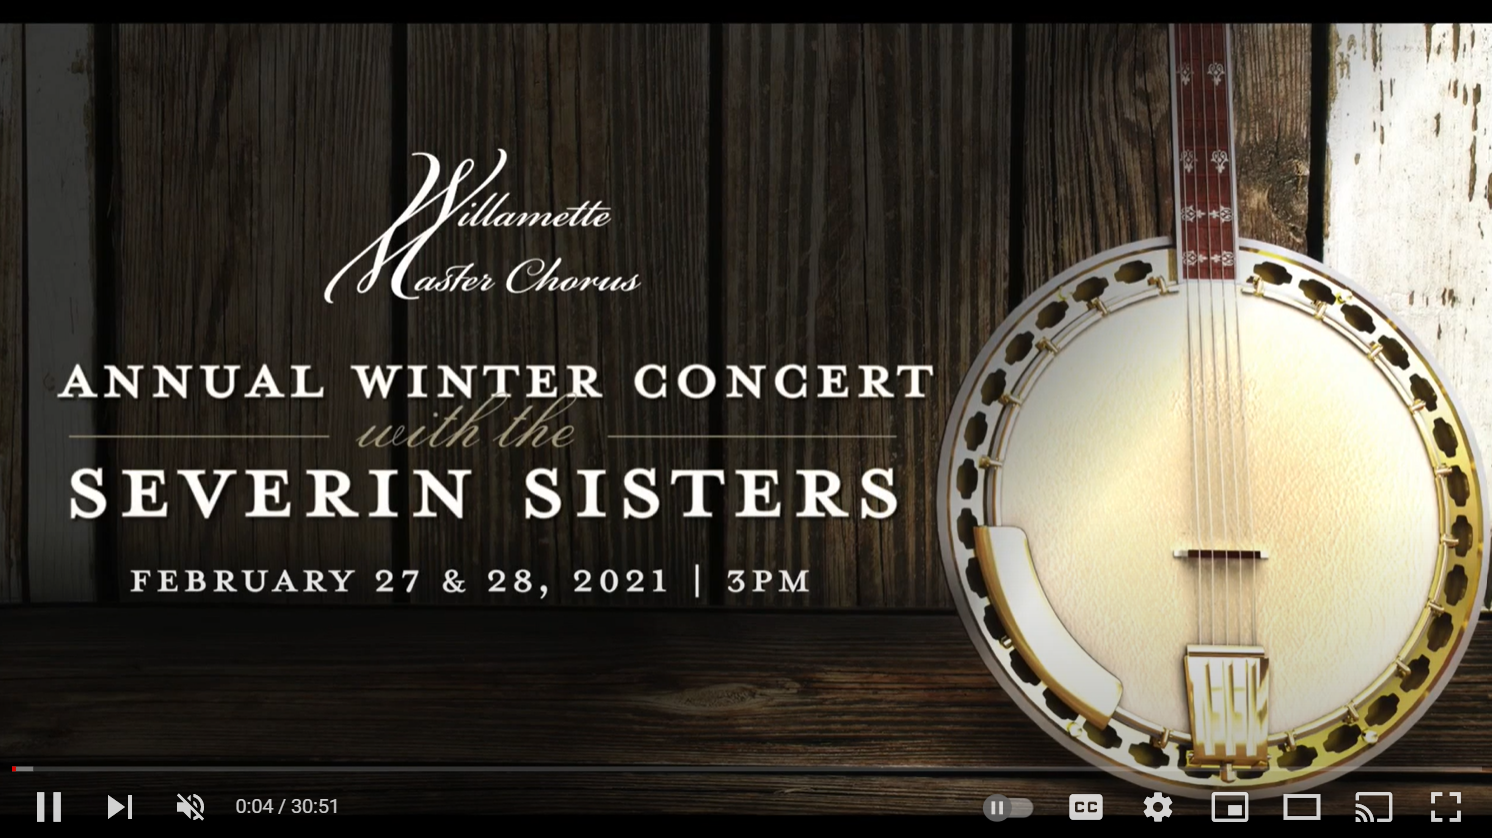 2021 Winter Virtual Choir Concert The Severin Sisters & Willamette Master Chorus Sunday